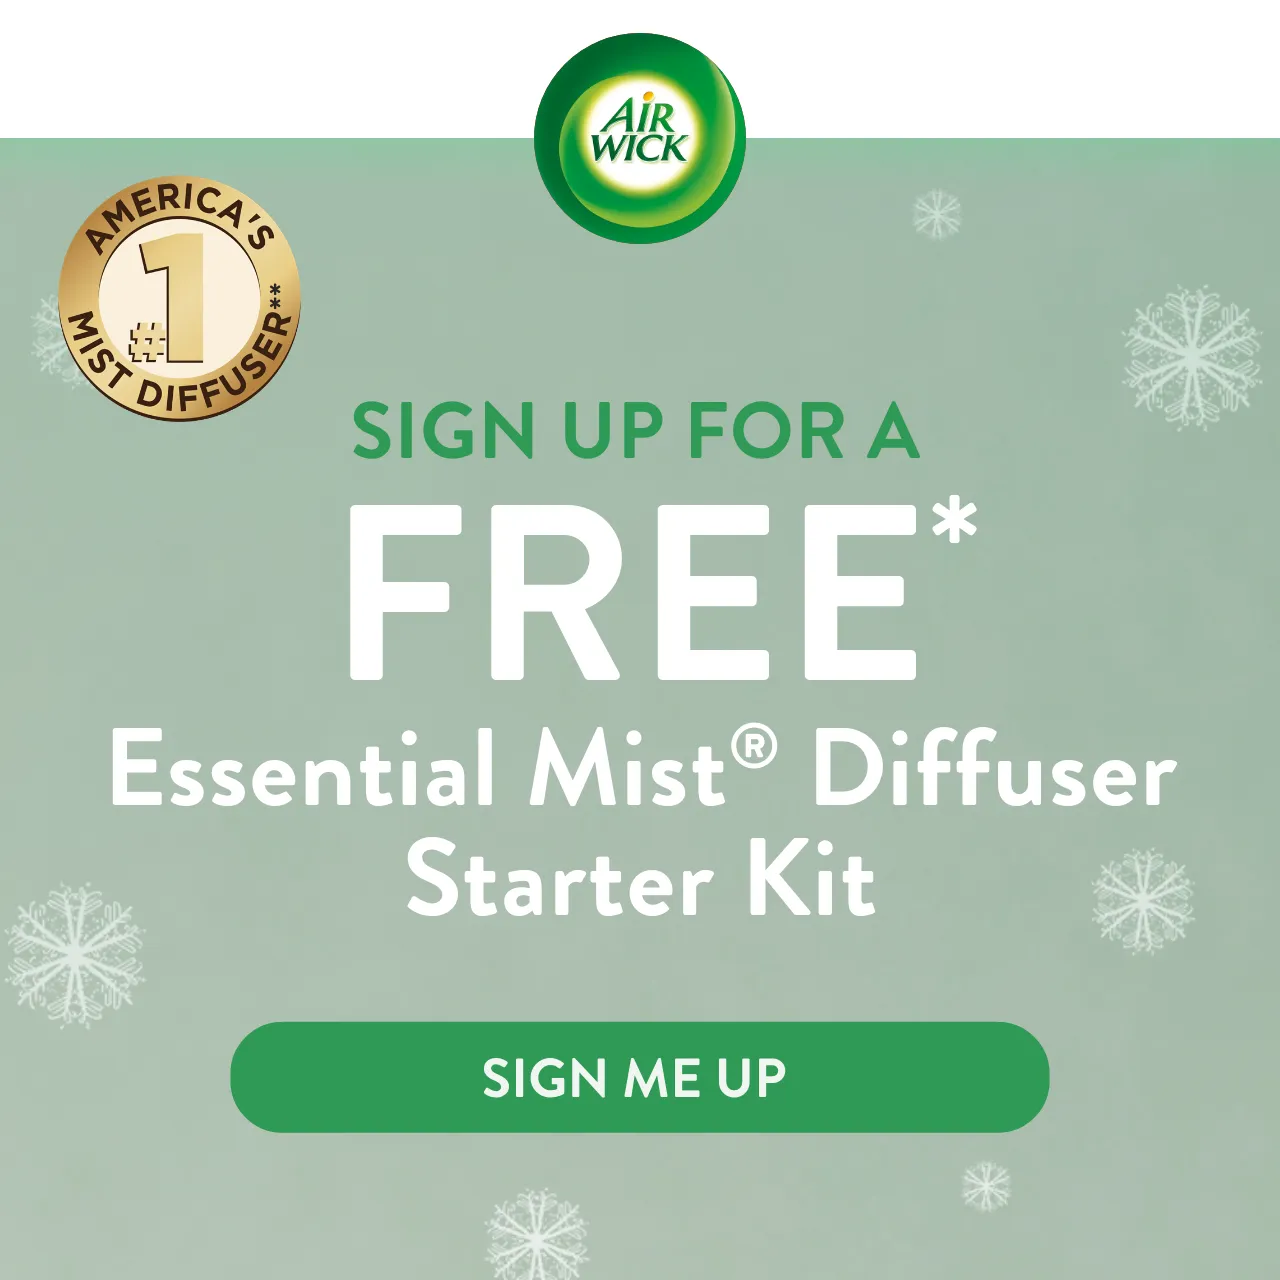 Free Air Wick Essential Mist Diffuser Starter Kit